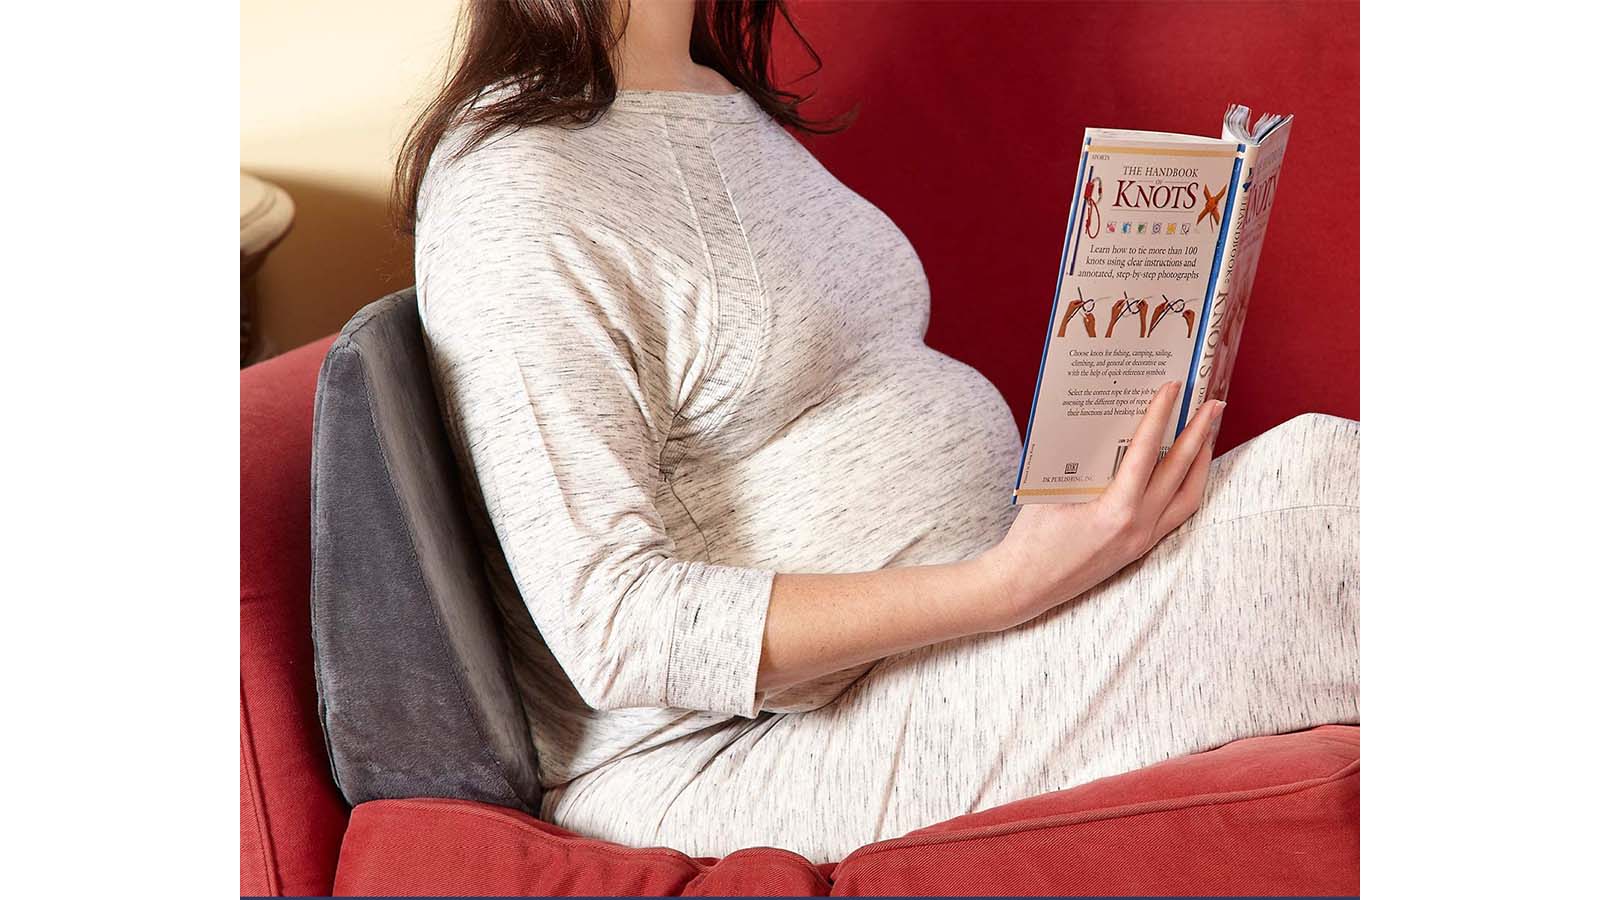 https://media.cnn.com/api/v1/images/stellar/prod/underscored-pregnantflying-hiccapop-pregnancy-pillow-wedge-for-maternity.jpg?q=h_900,w_1600,x_0,y_0